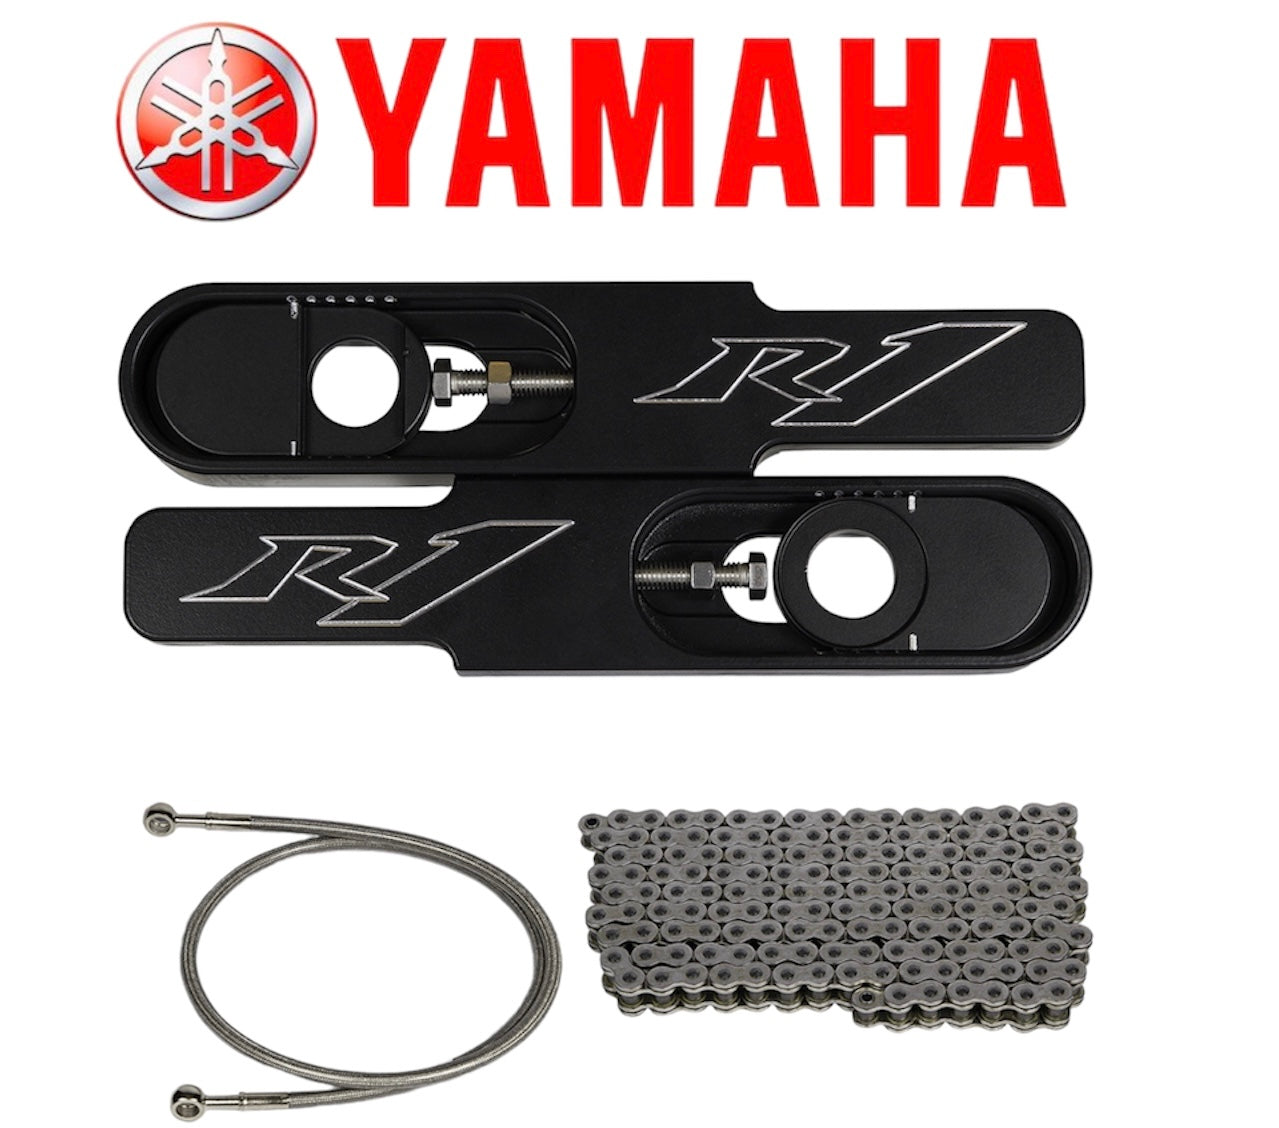 Yamaha R1 4 1/2 to 9" Swingarm Extensions